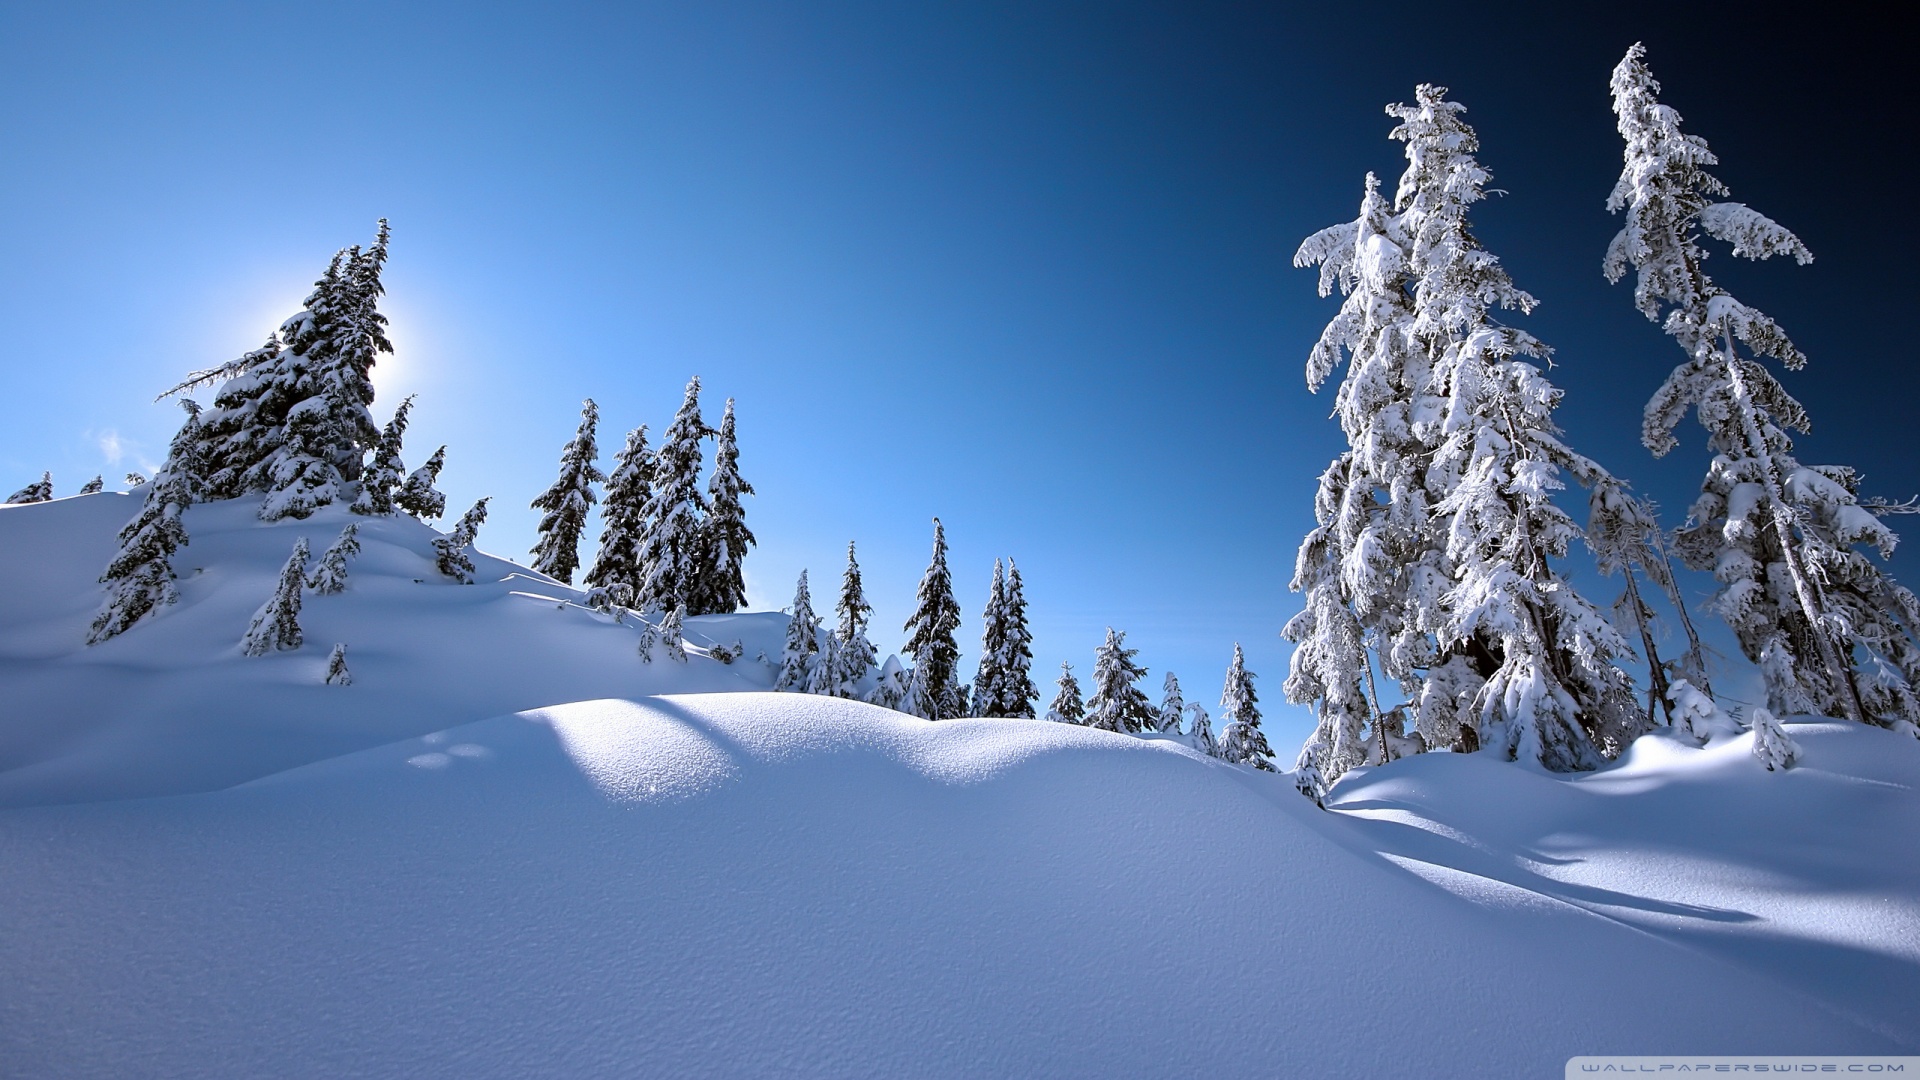 Beautiful Winter Scenery Wallpaper